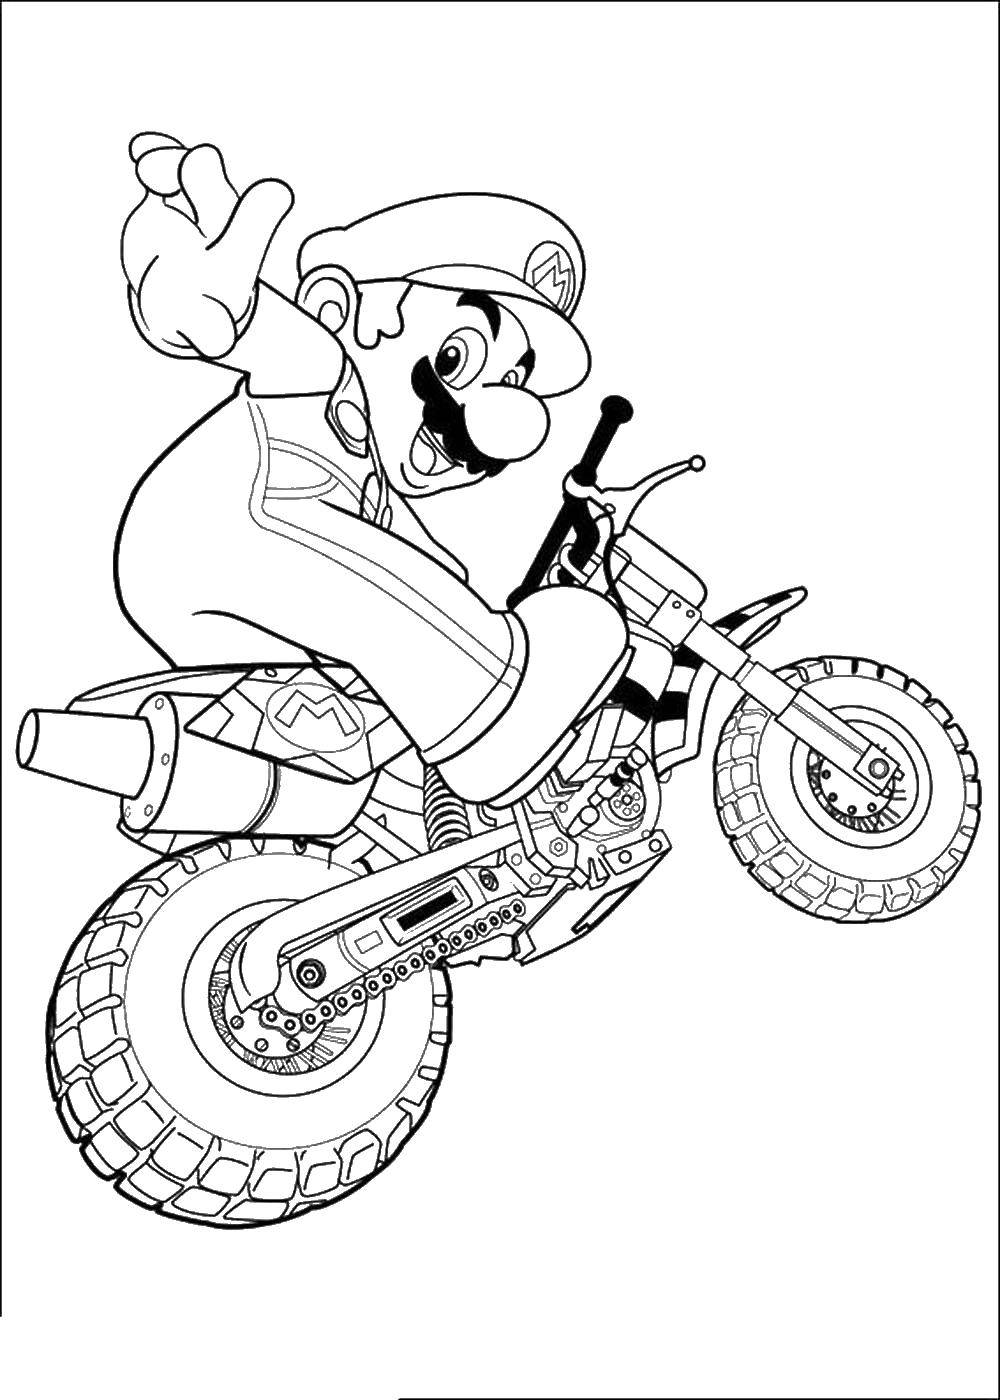 Coloring Mario on a motorcycle. Category Mario. Tags:  games, Mario, motorcycle.